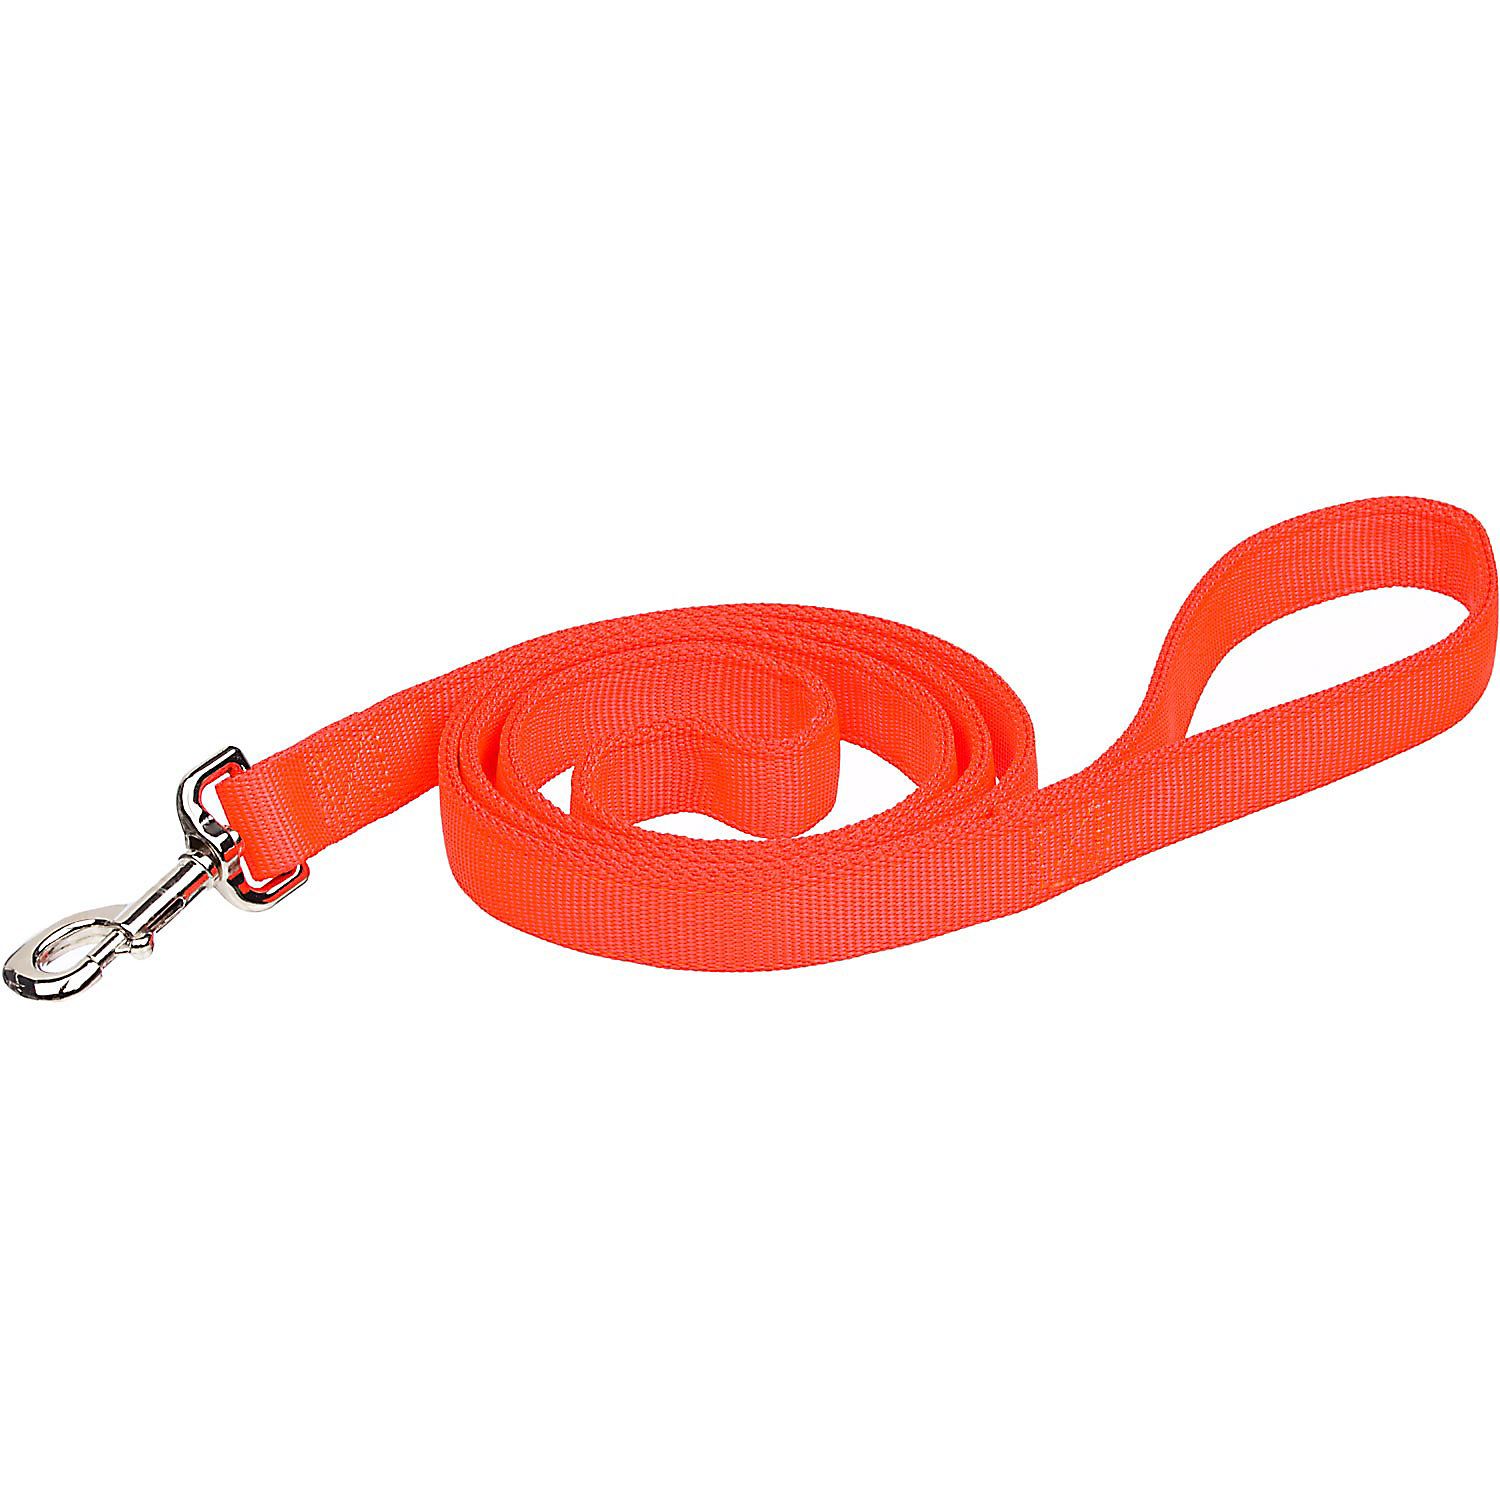 Remington Orange Double Ply Safety Dog Leash | PETCO Animal Supplies